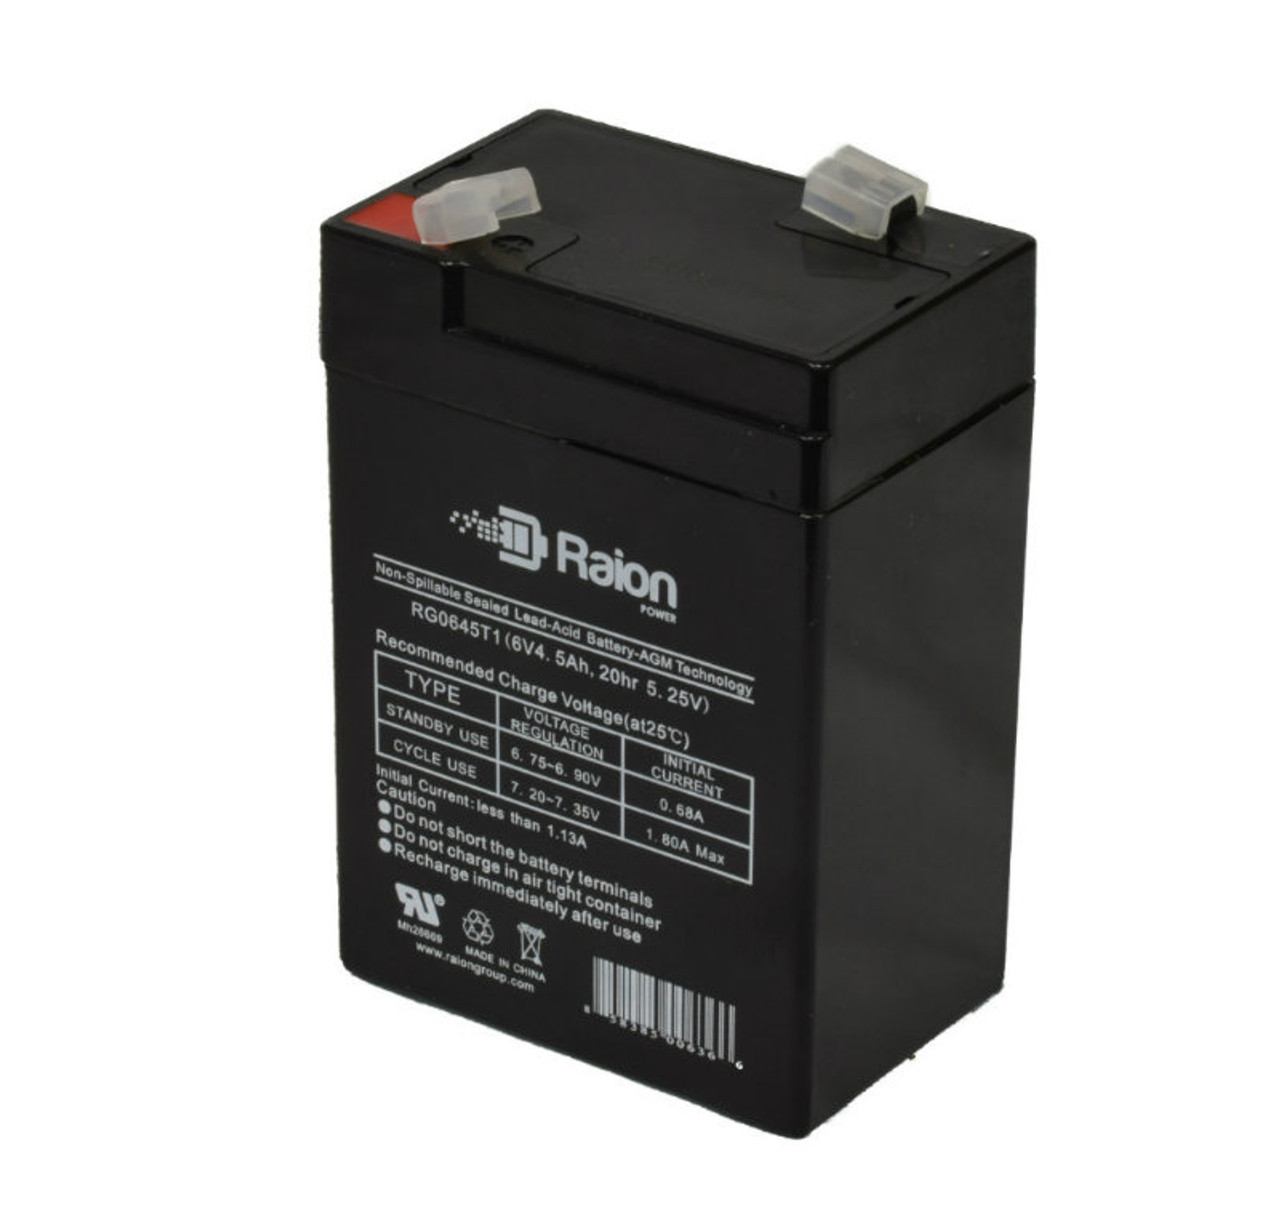 Raion Power RG0645T1 6V 4.5Ah Replacement Battery Cartridge for Prostar PR642